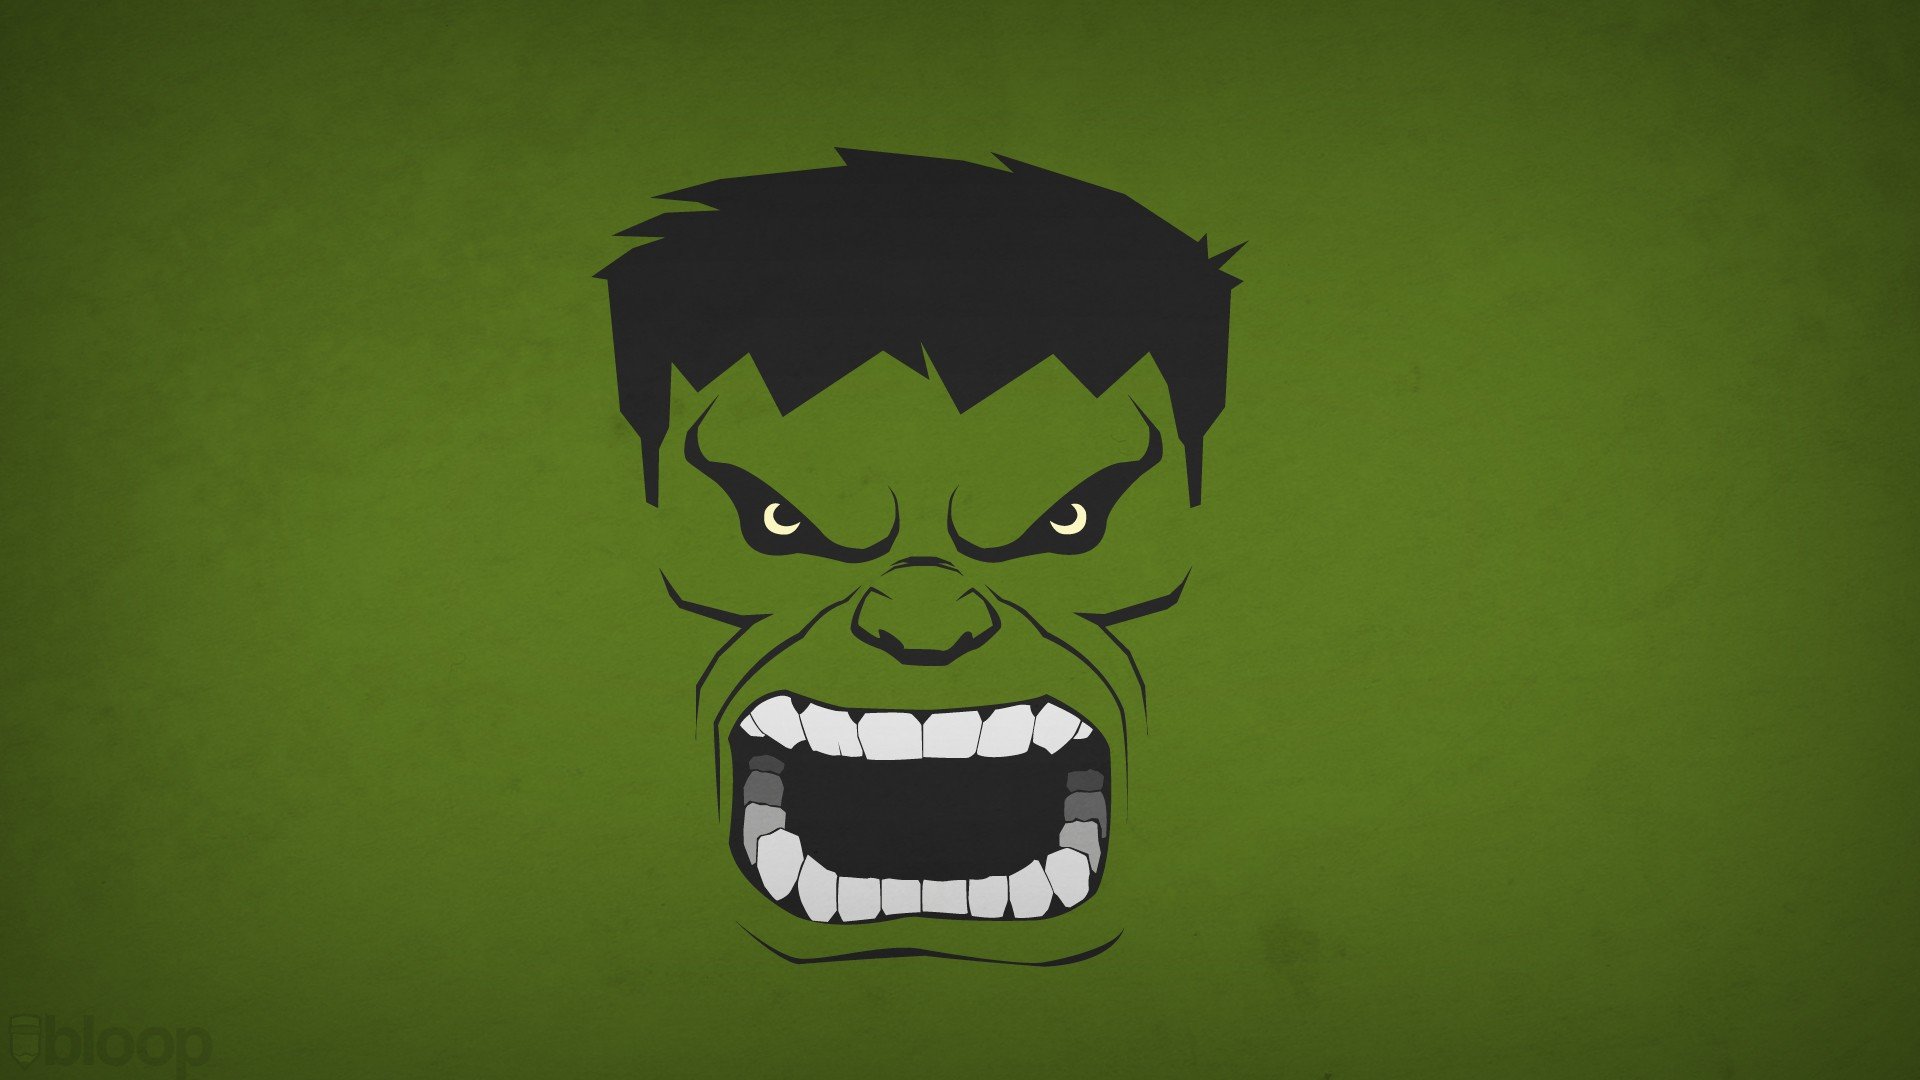 Wallpaper Marvel comics, hulk face